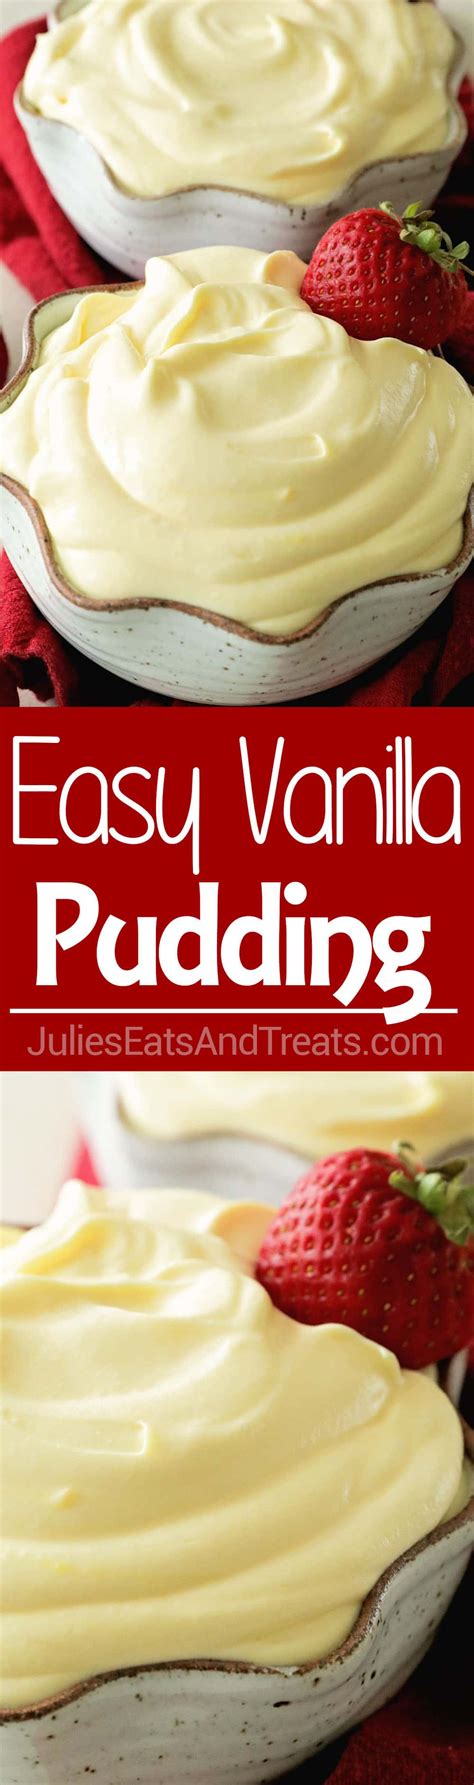 Banana cupcakes recipe with vanilla pudding frostingsweep tight. Easy Vanilla Pudding - Julie's Eats & Treats